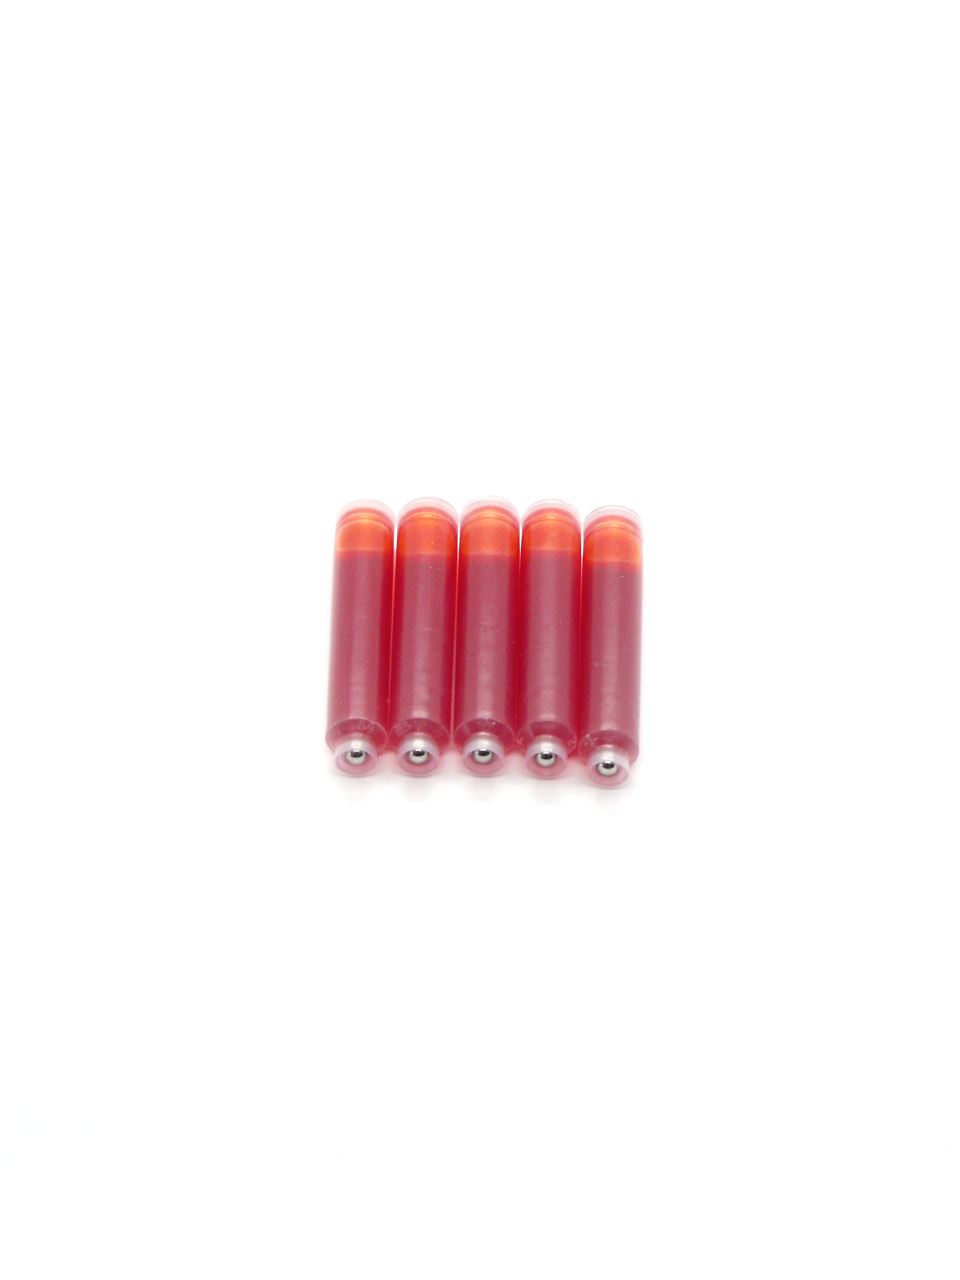 Top Ink Cartridges For Standard International Fountain Pens (Orange)